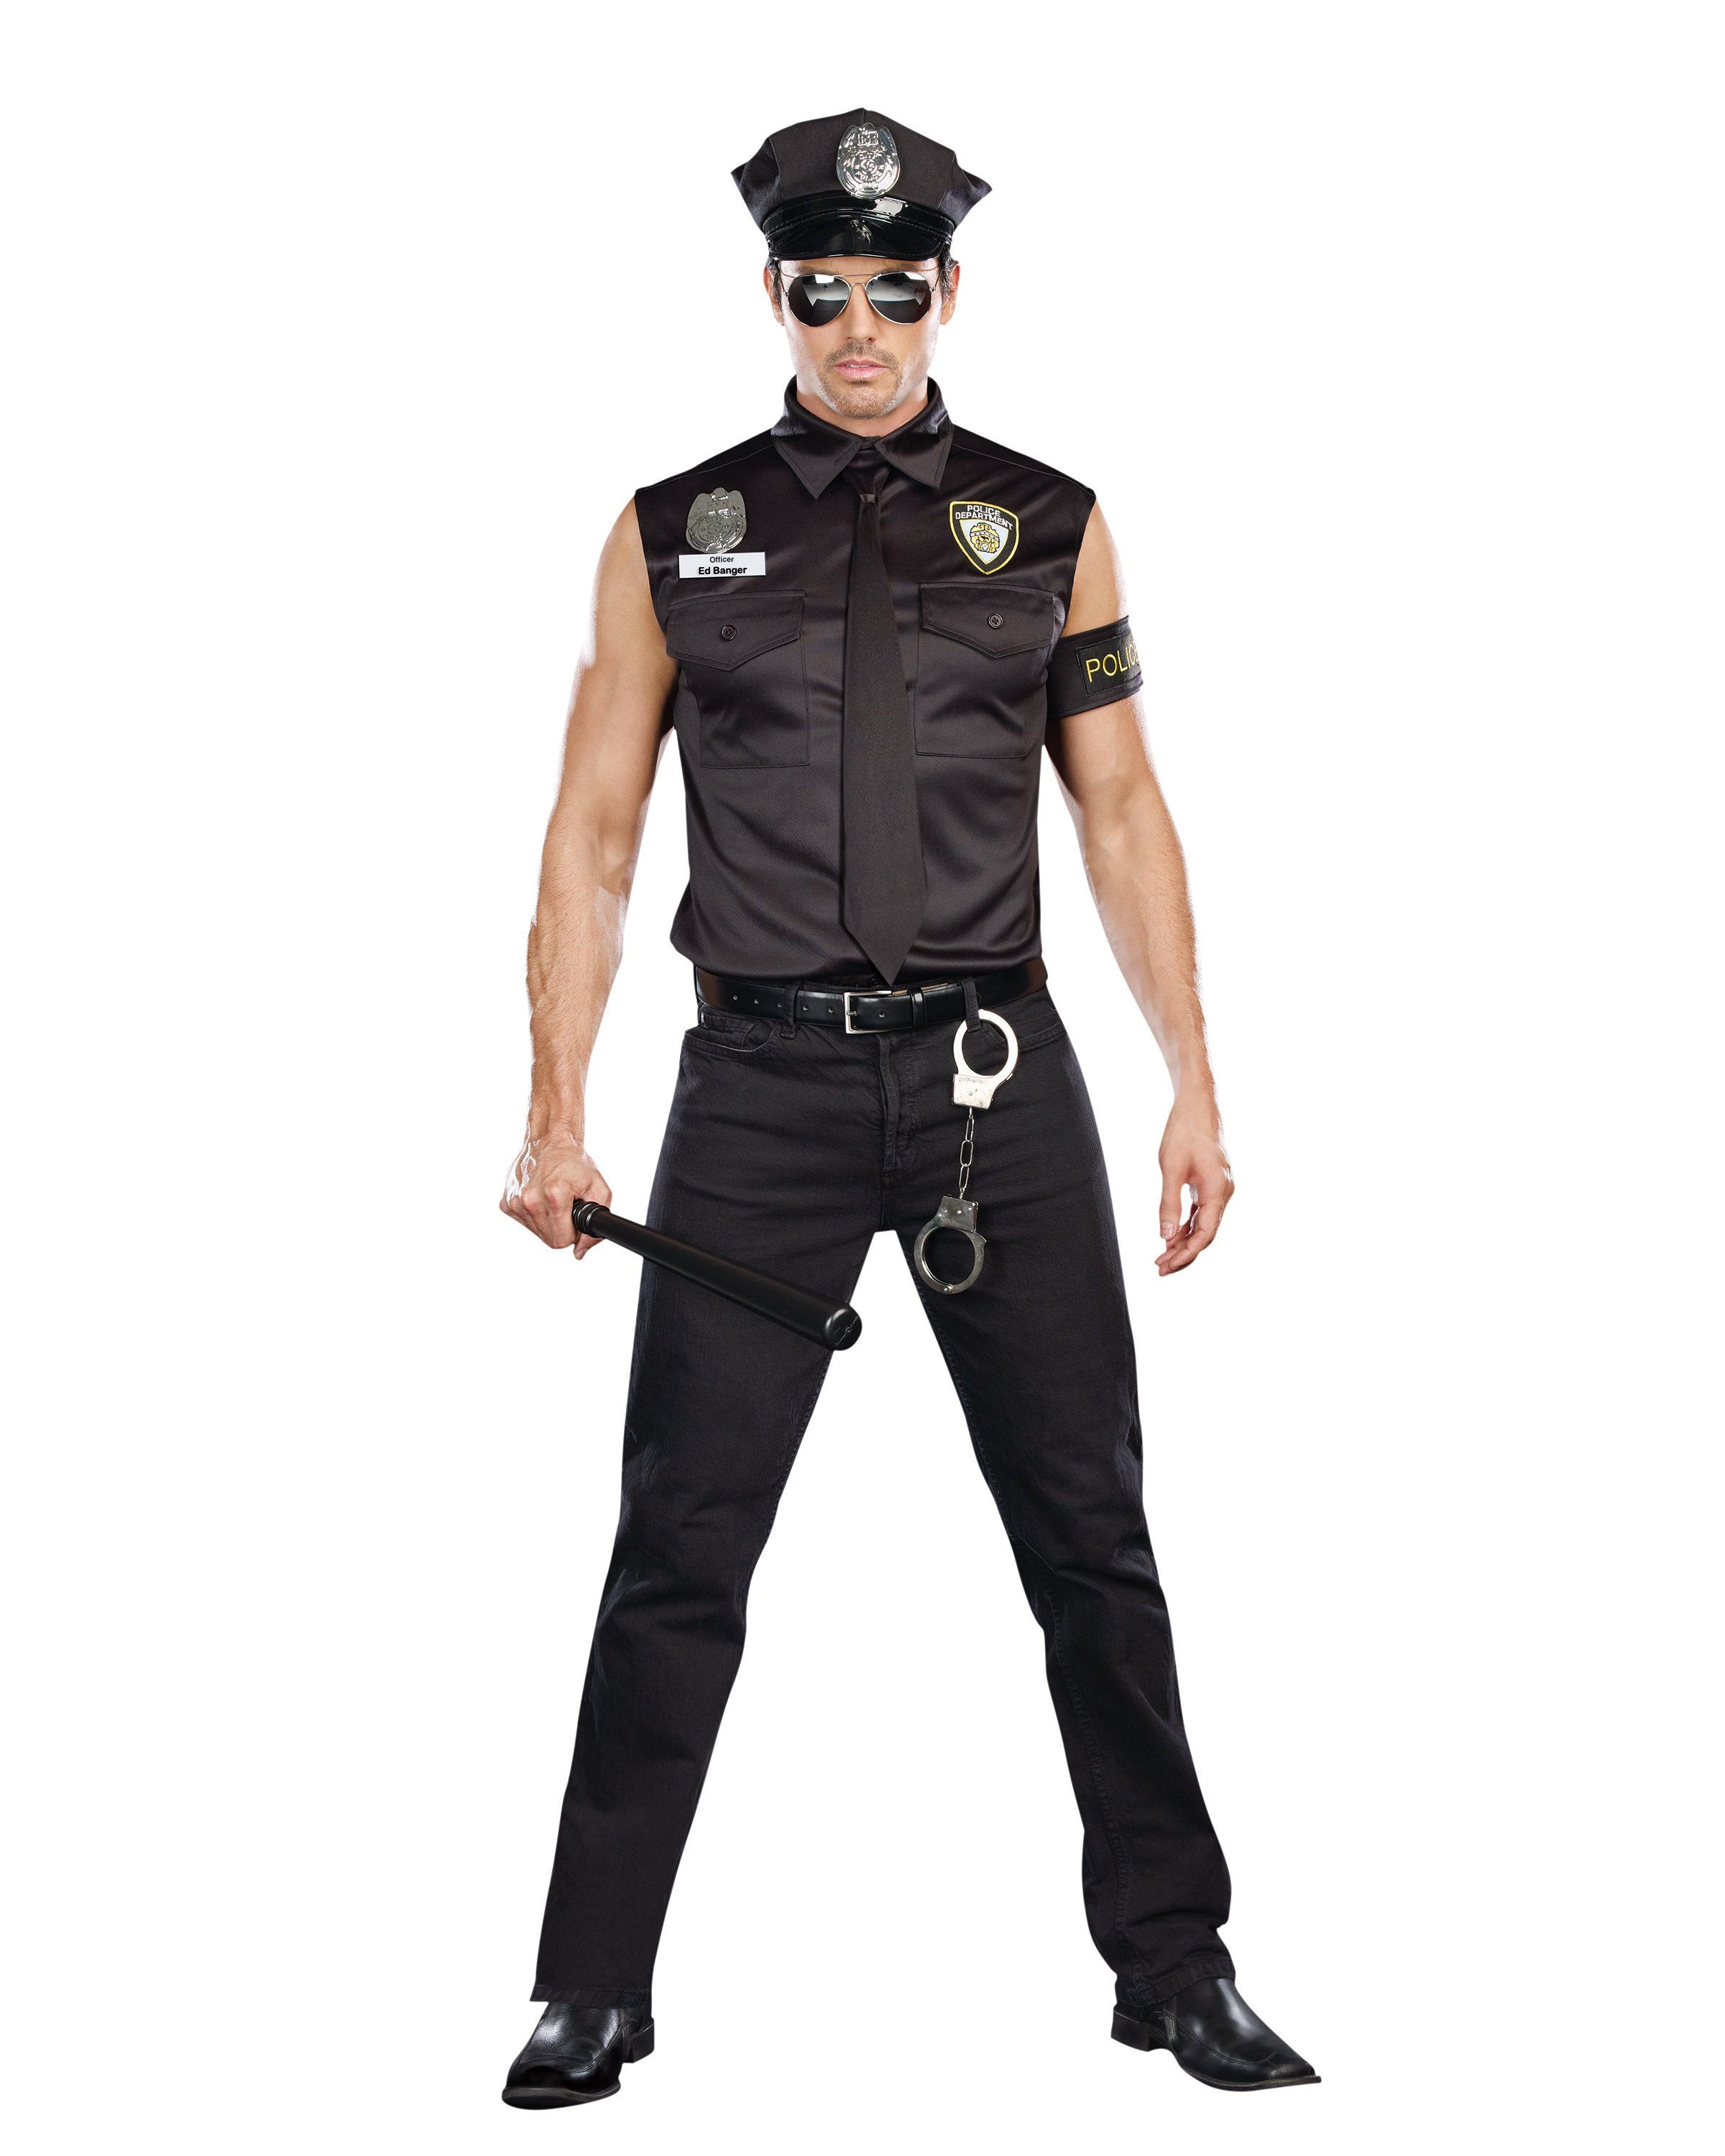 Dirty Officer Ed Banger Adult Costume